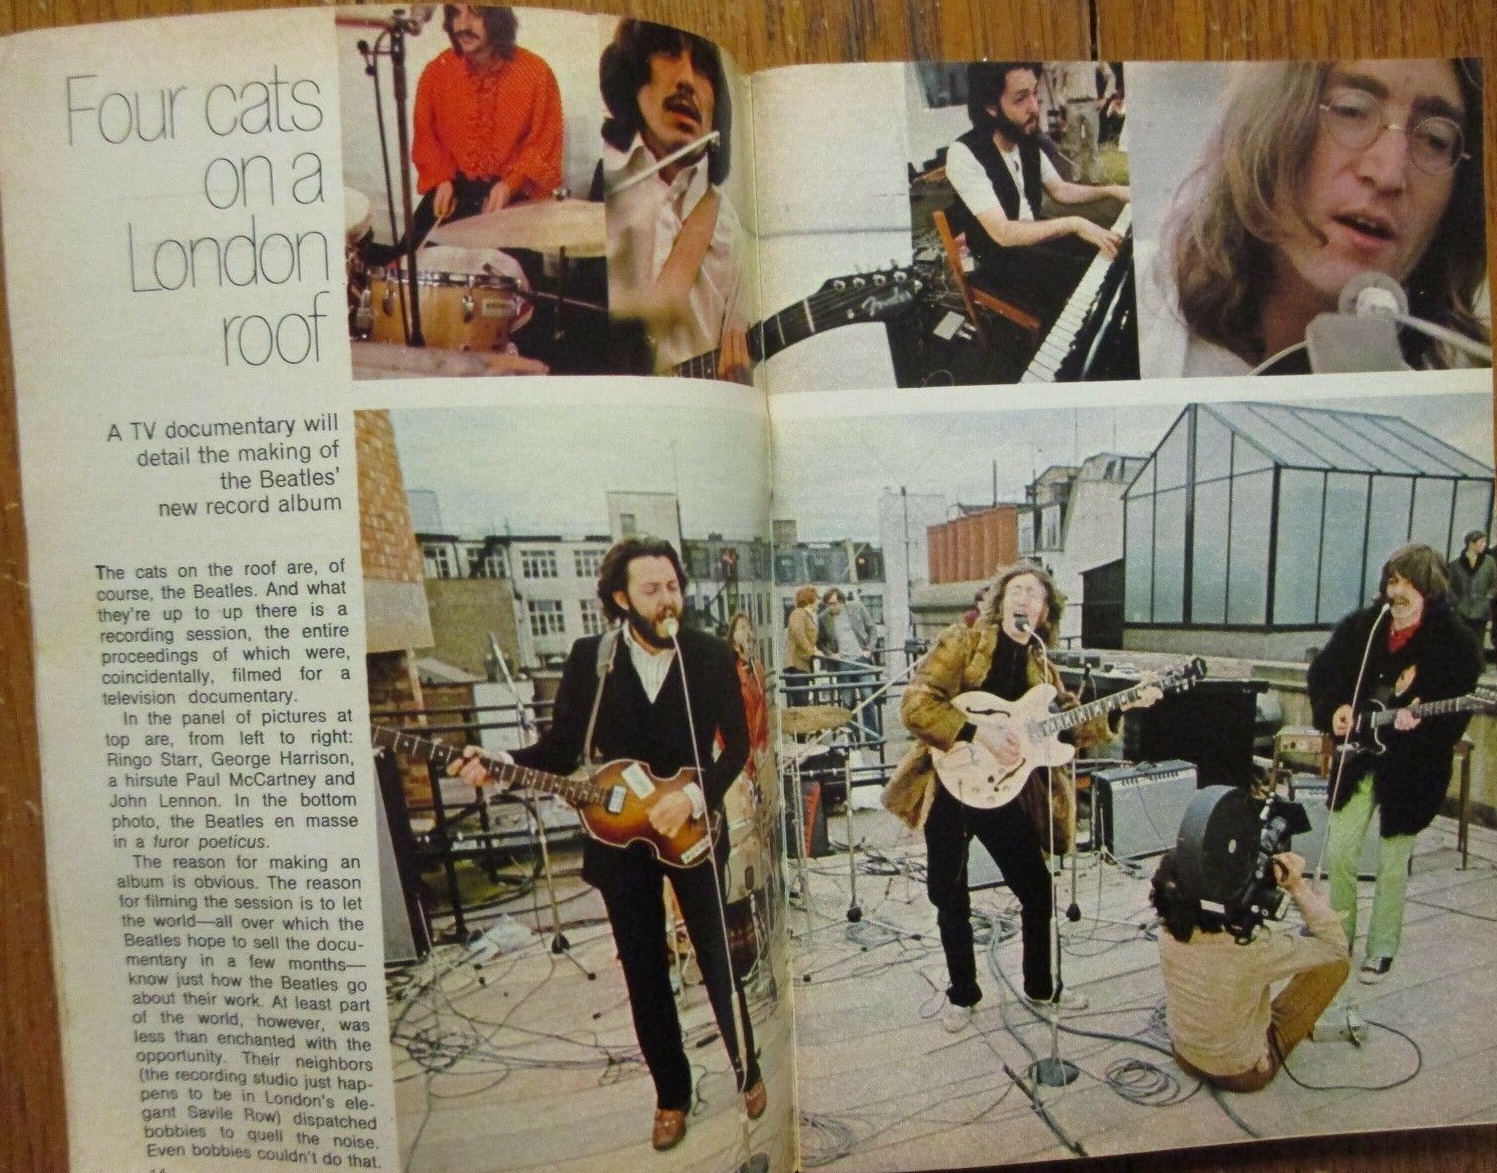 Paul McCartney, John Lennon, George Harrison, Ringo Starr, and The Beatles in Let It Be (1970)